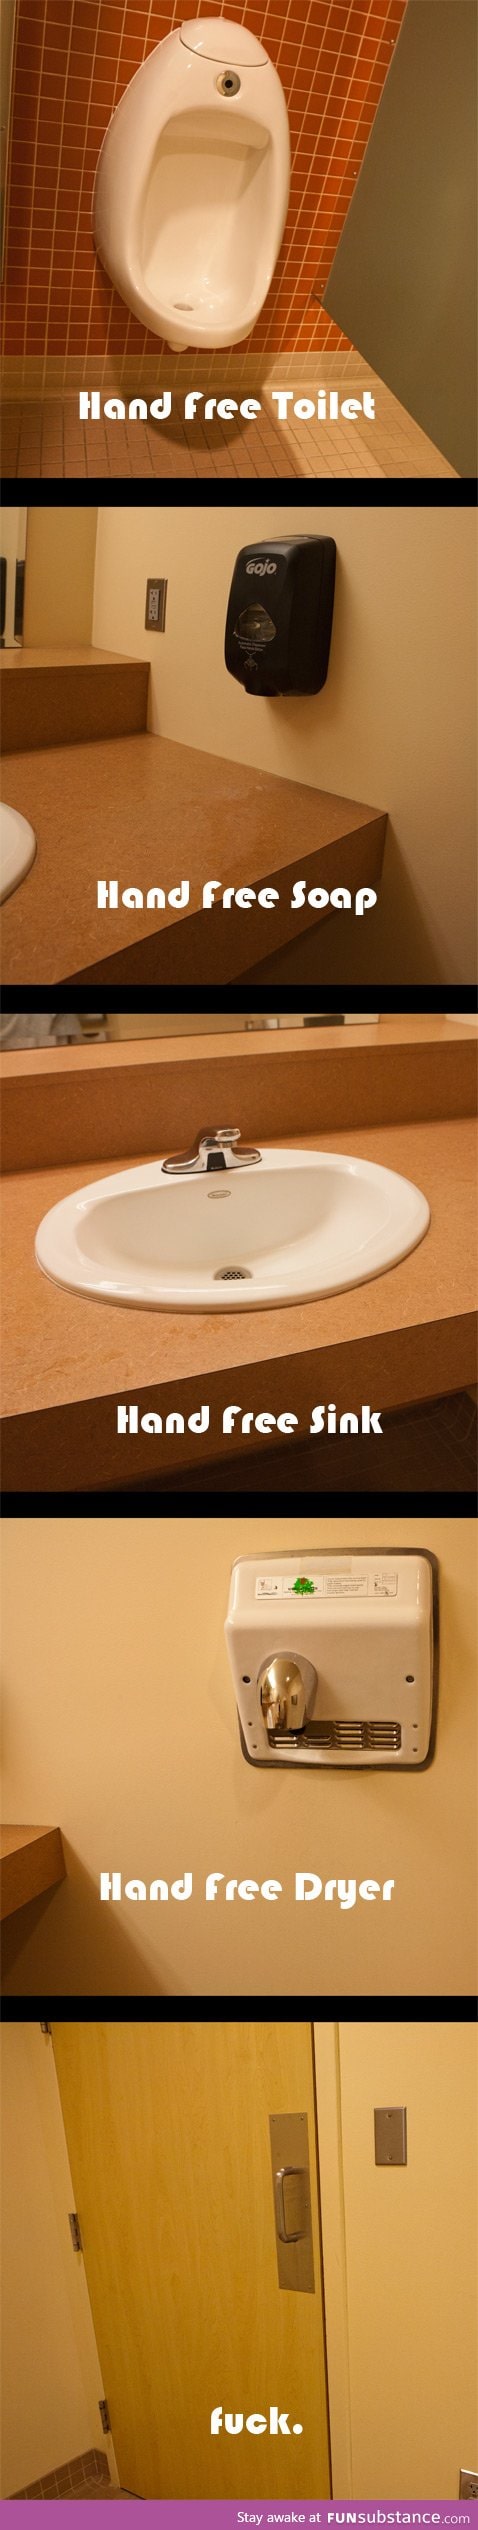 Hands-Free bathroom